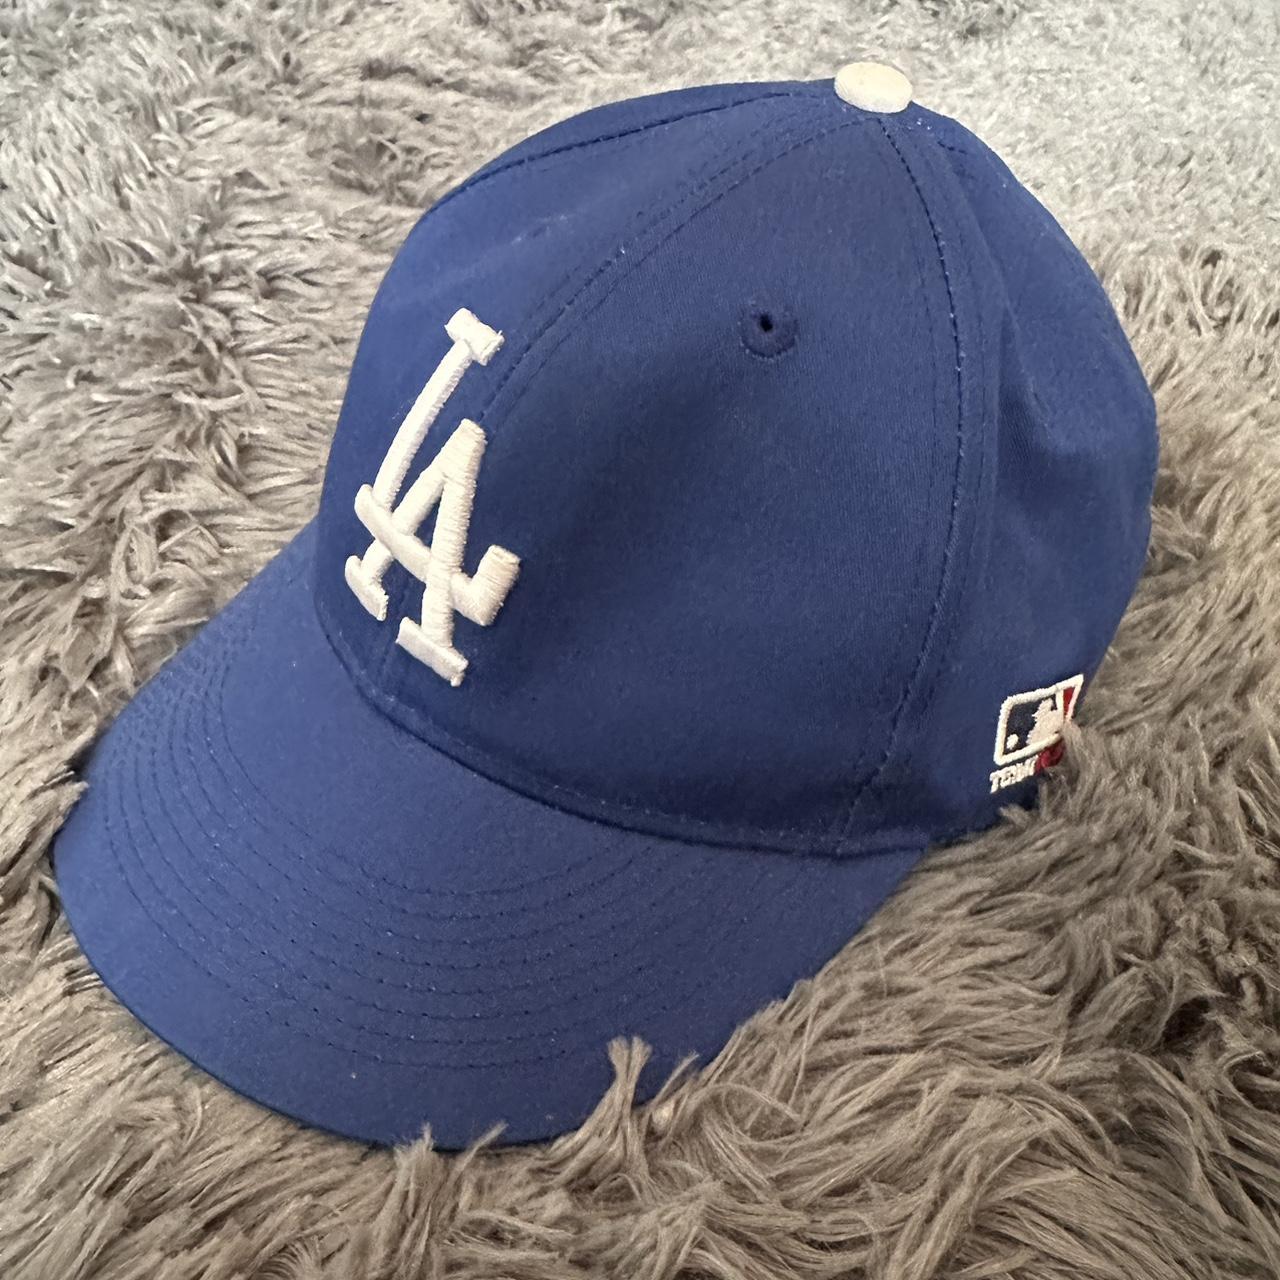 MLB Kids' Caps - Blue